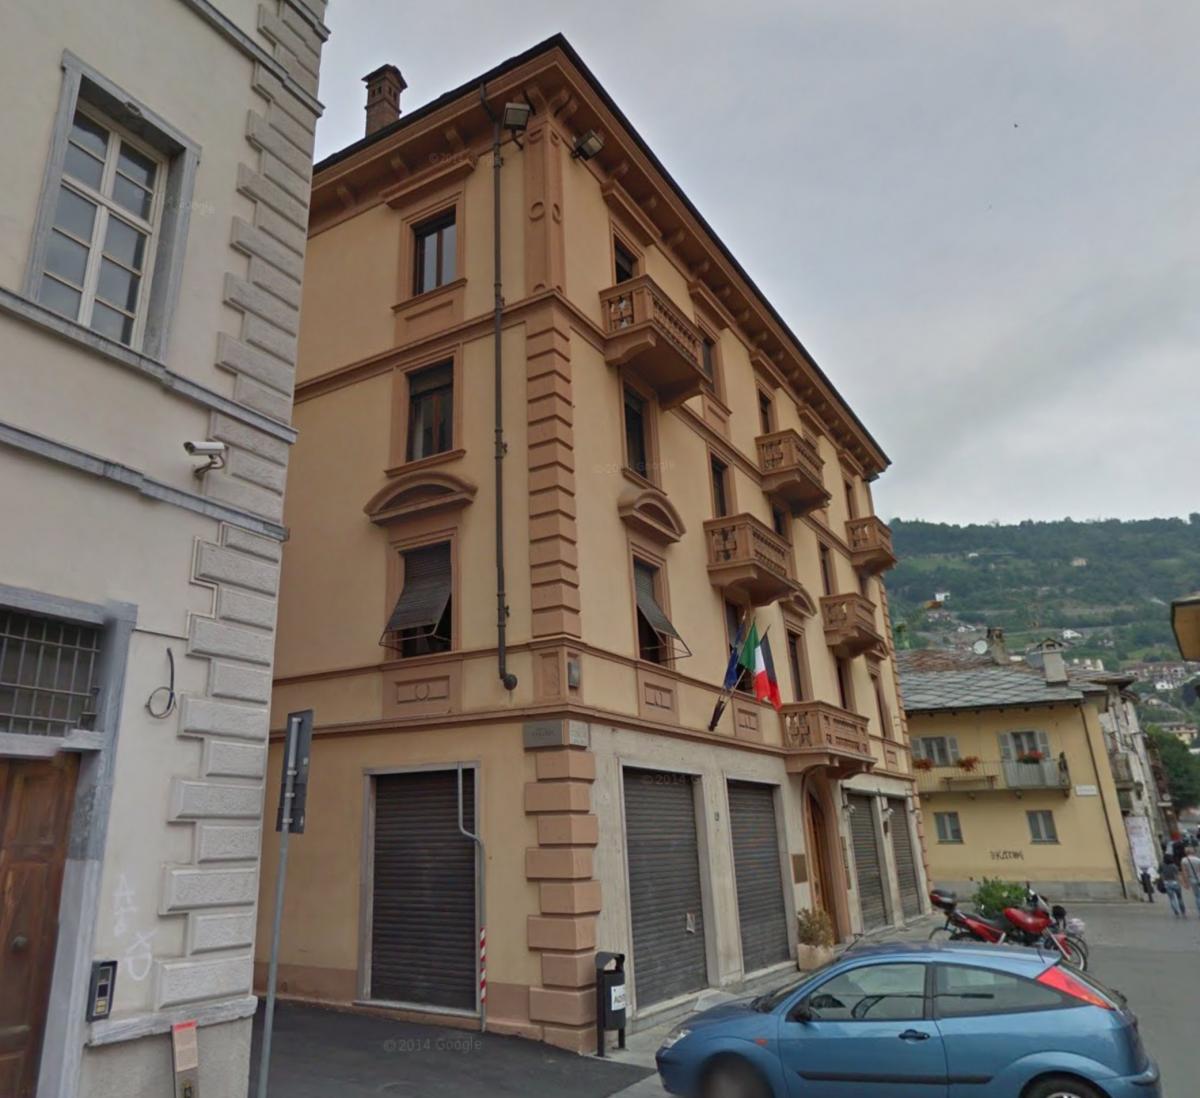 Valle d\'Aosta: 27 i beni confiscati alle mafie